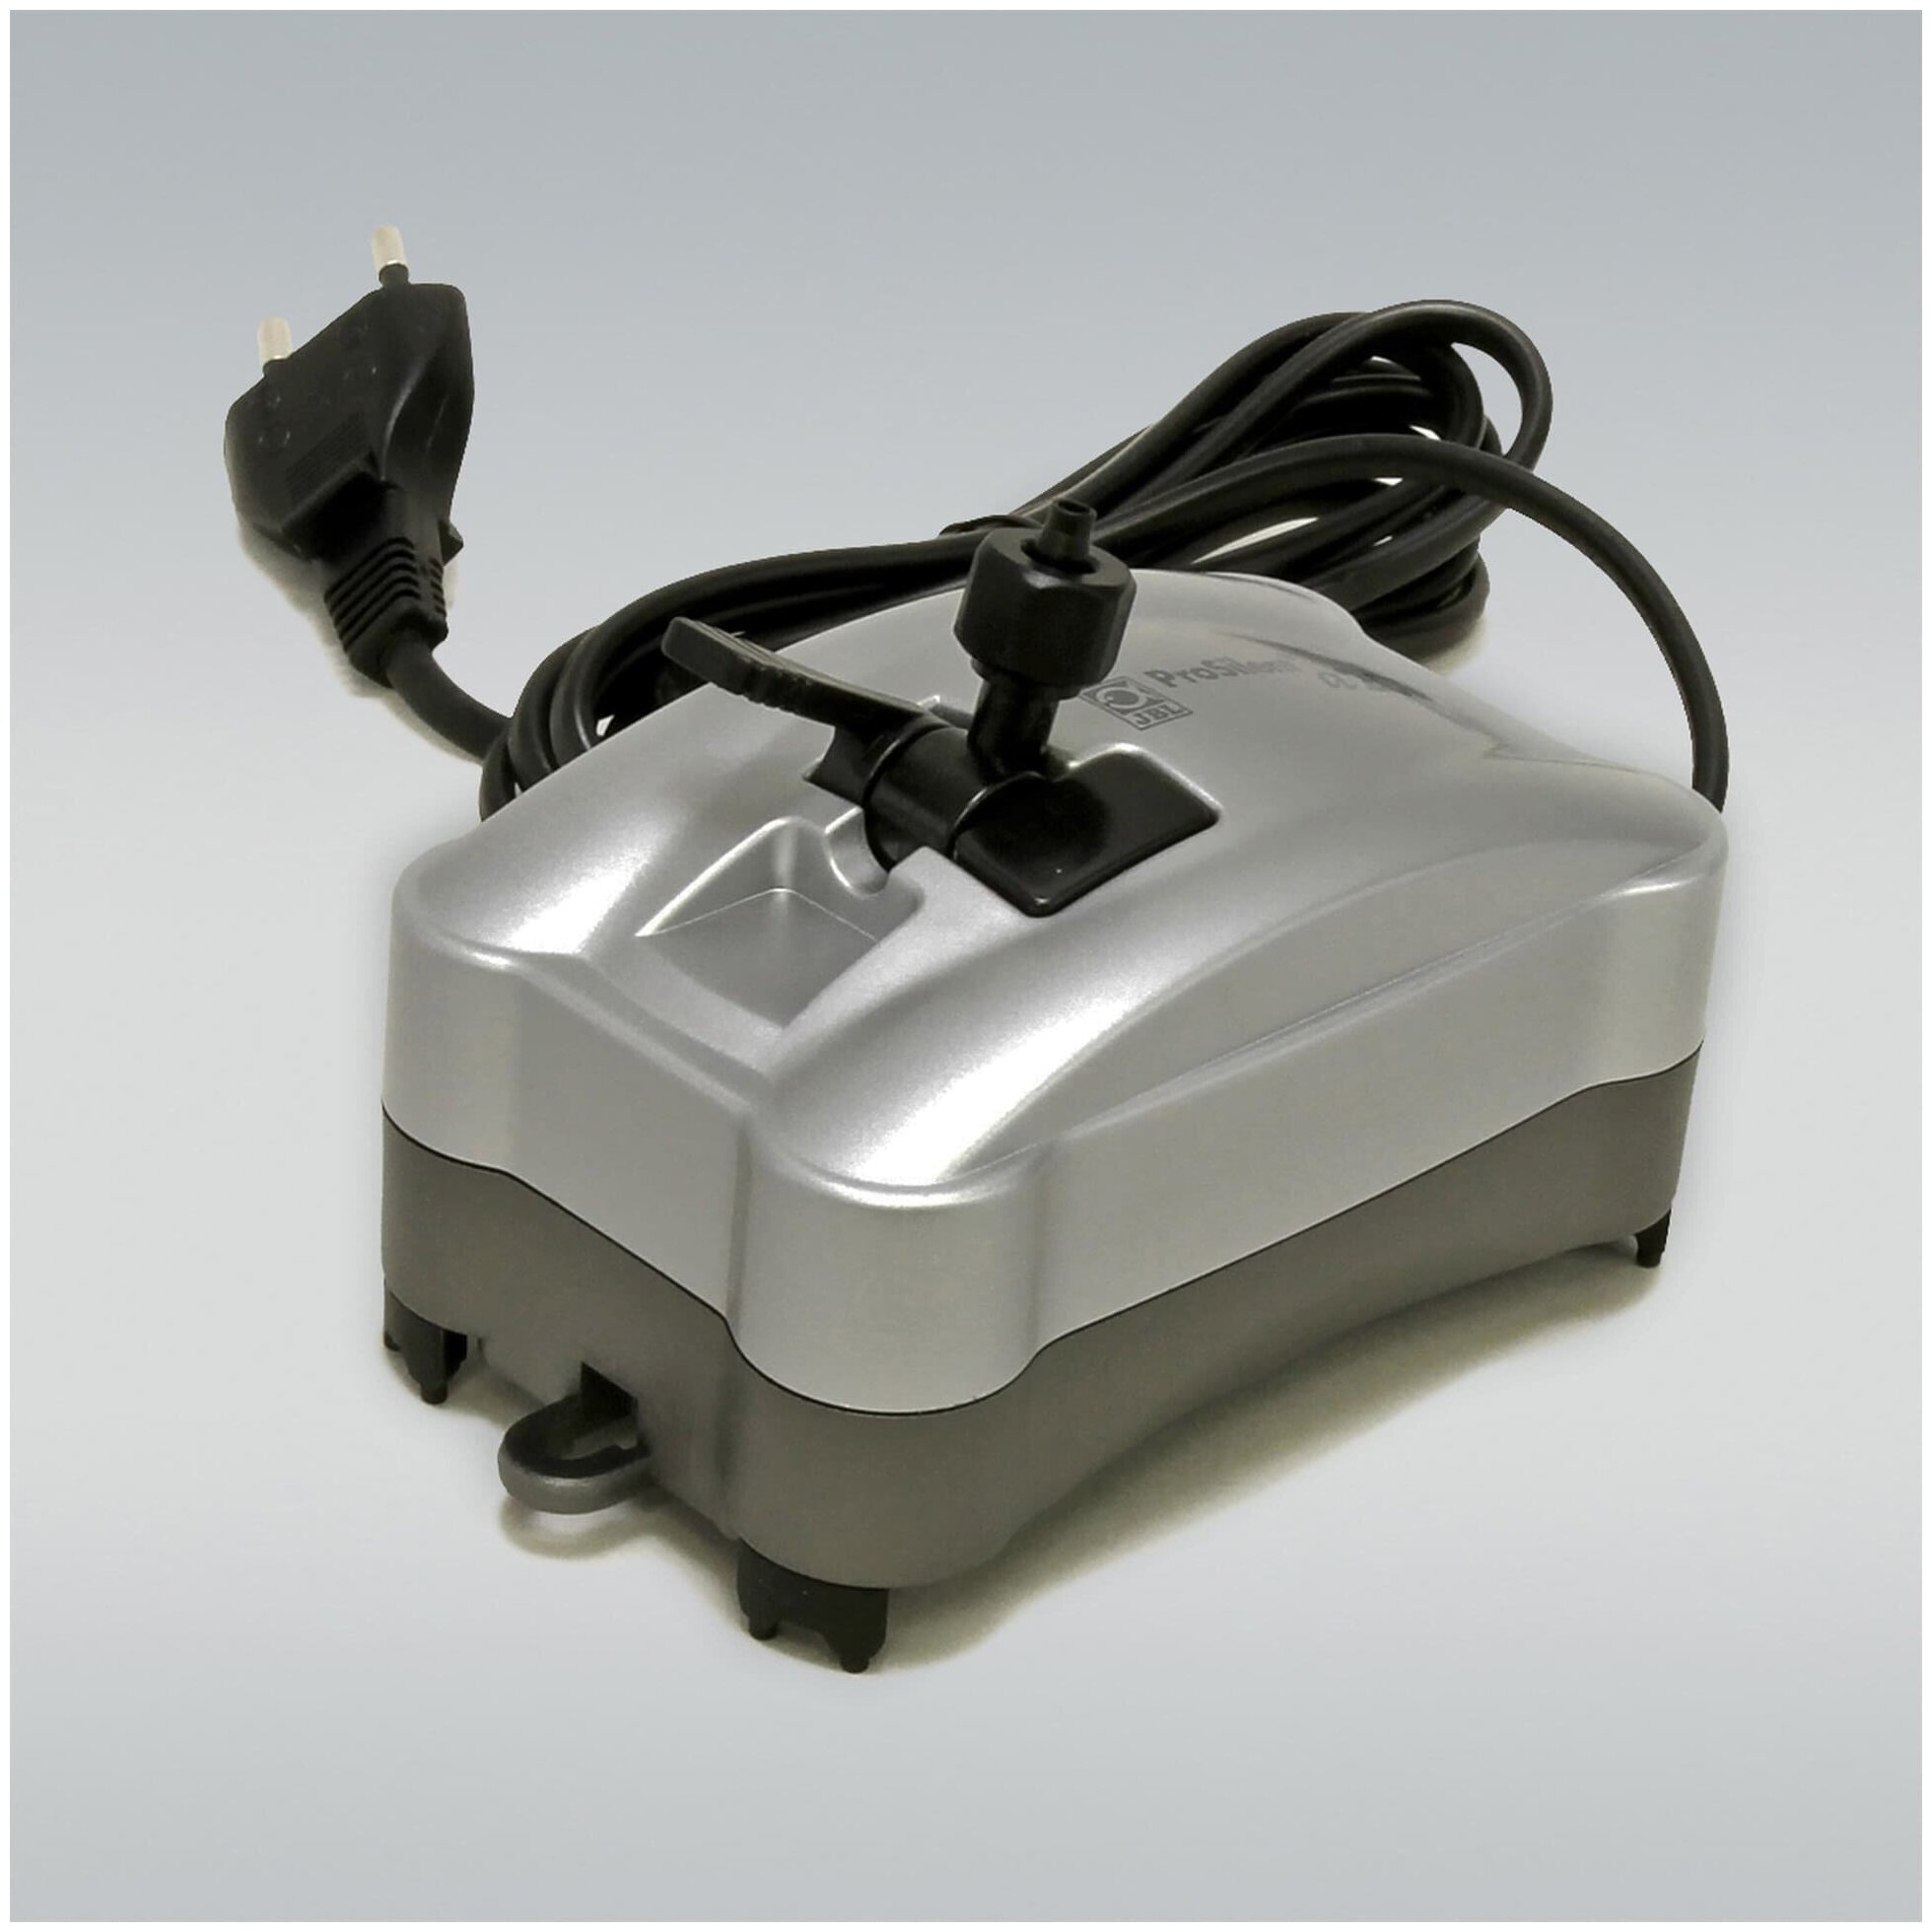 Сверхтихий компрессор JBL 200 л/ч для аквариумов 50-300 литров - фото №6